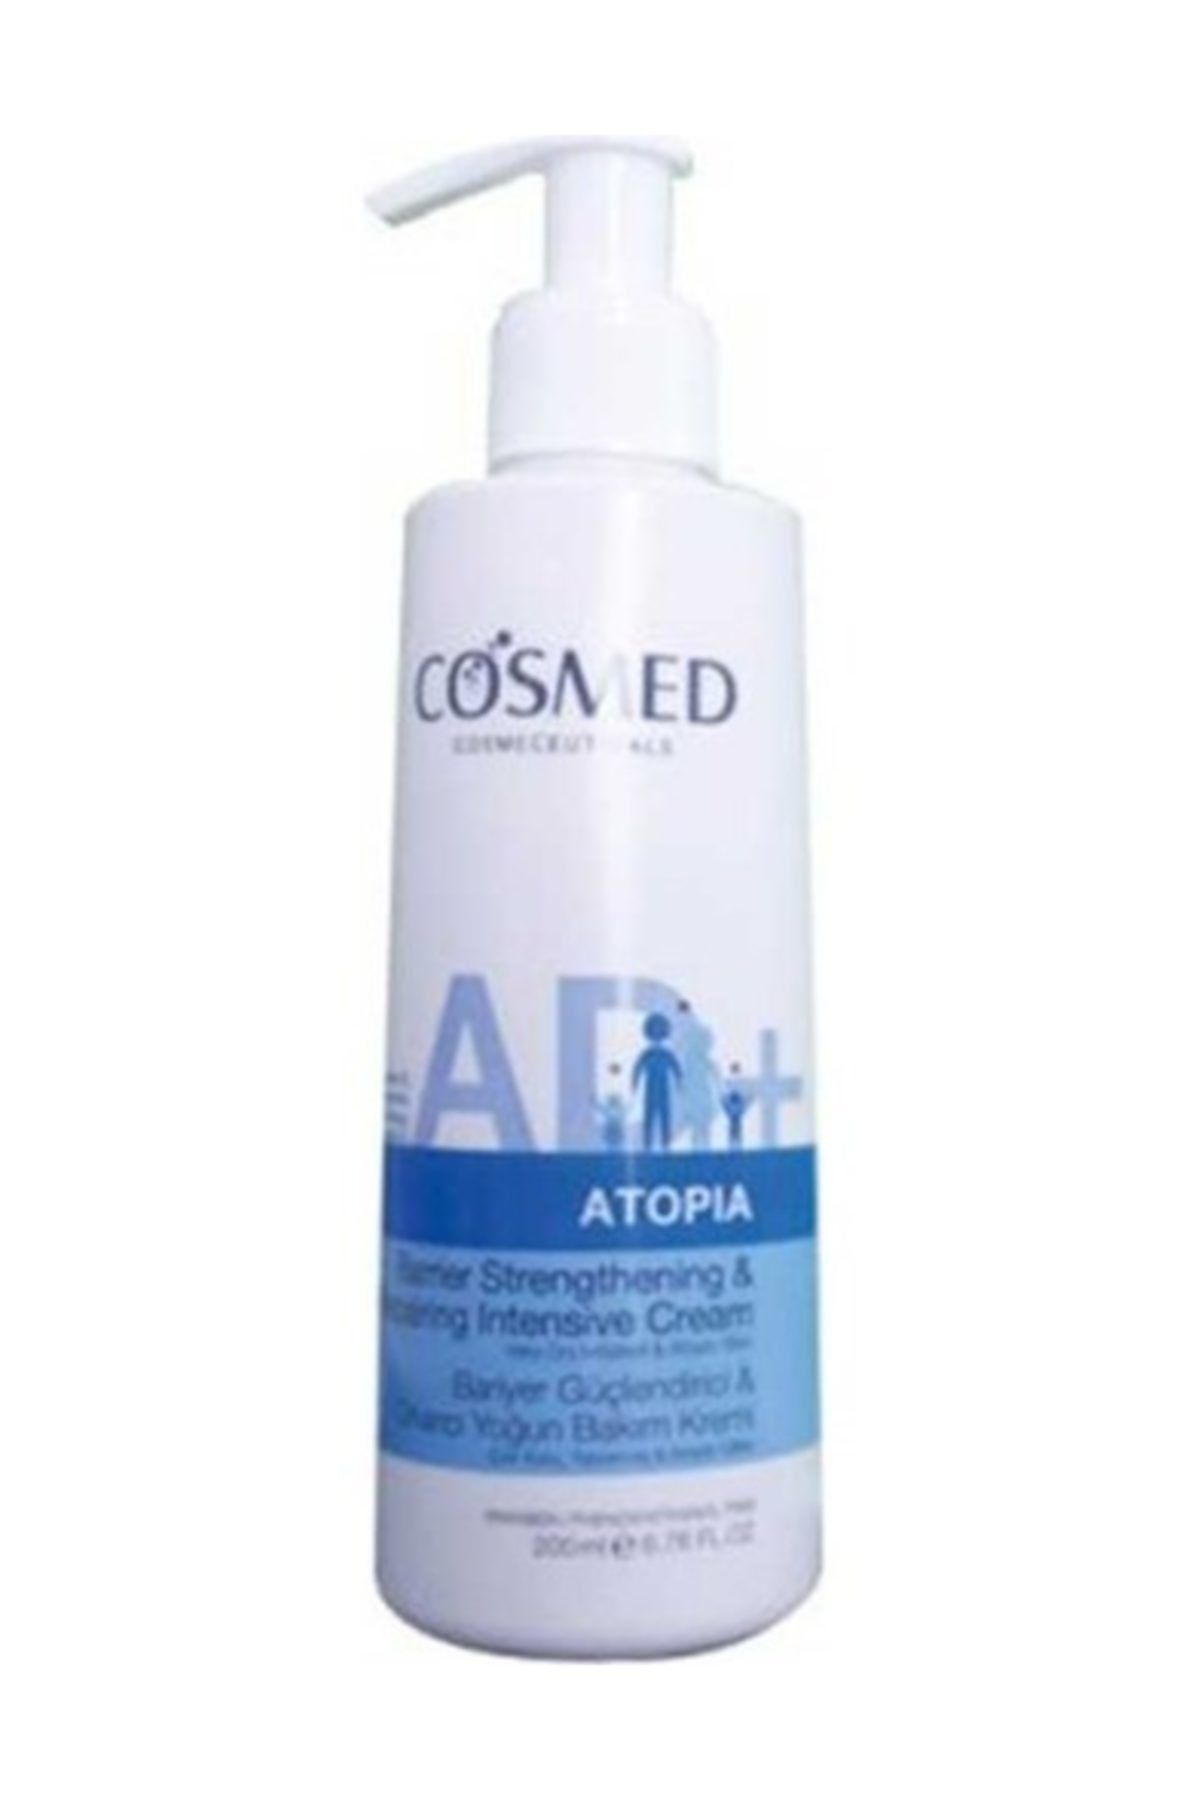 COSMED Atopia Barrier Strengthening & Repairing Intensive Cream 200 ml